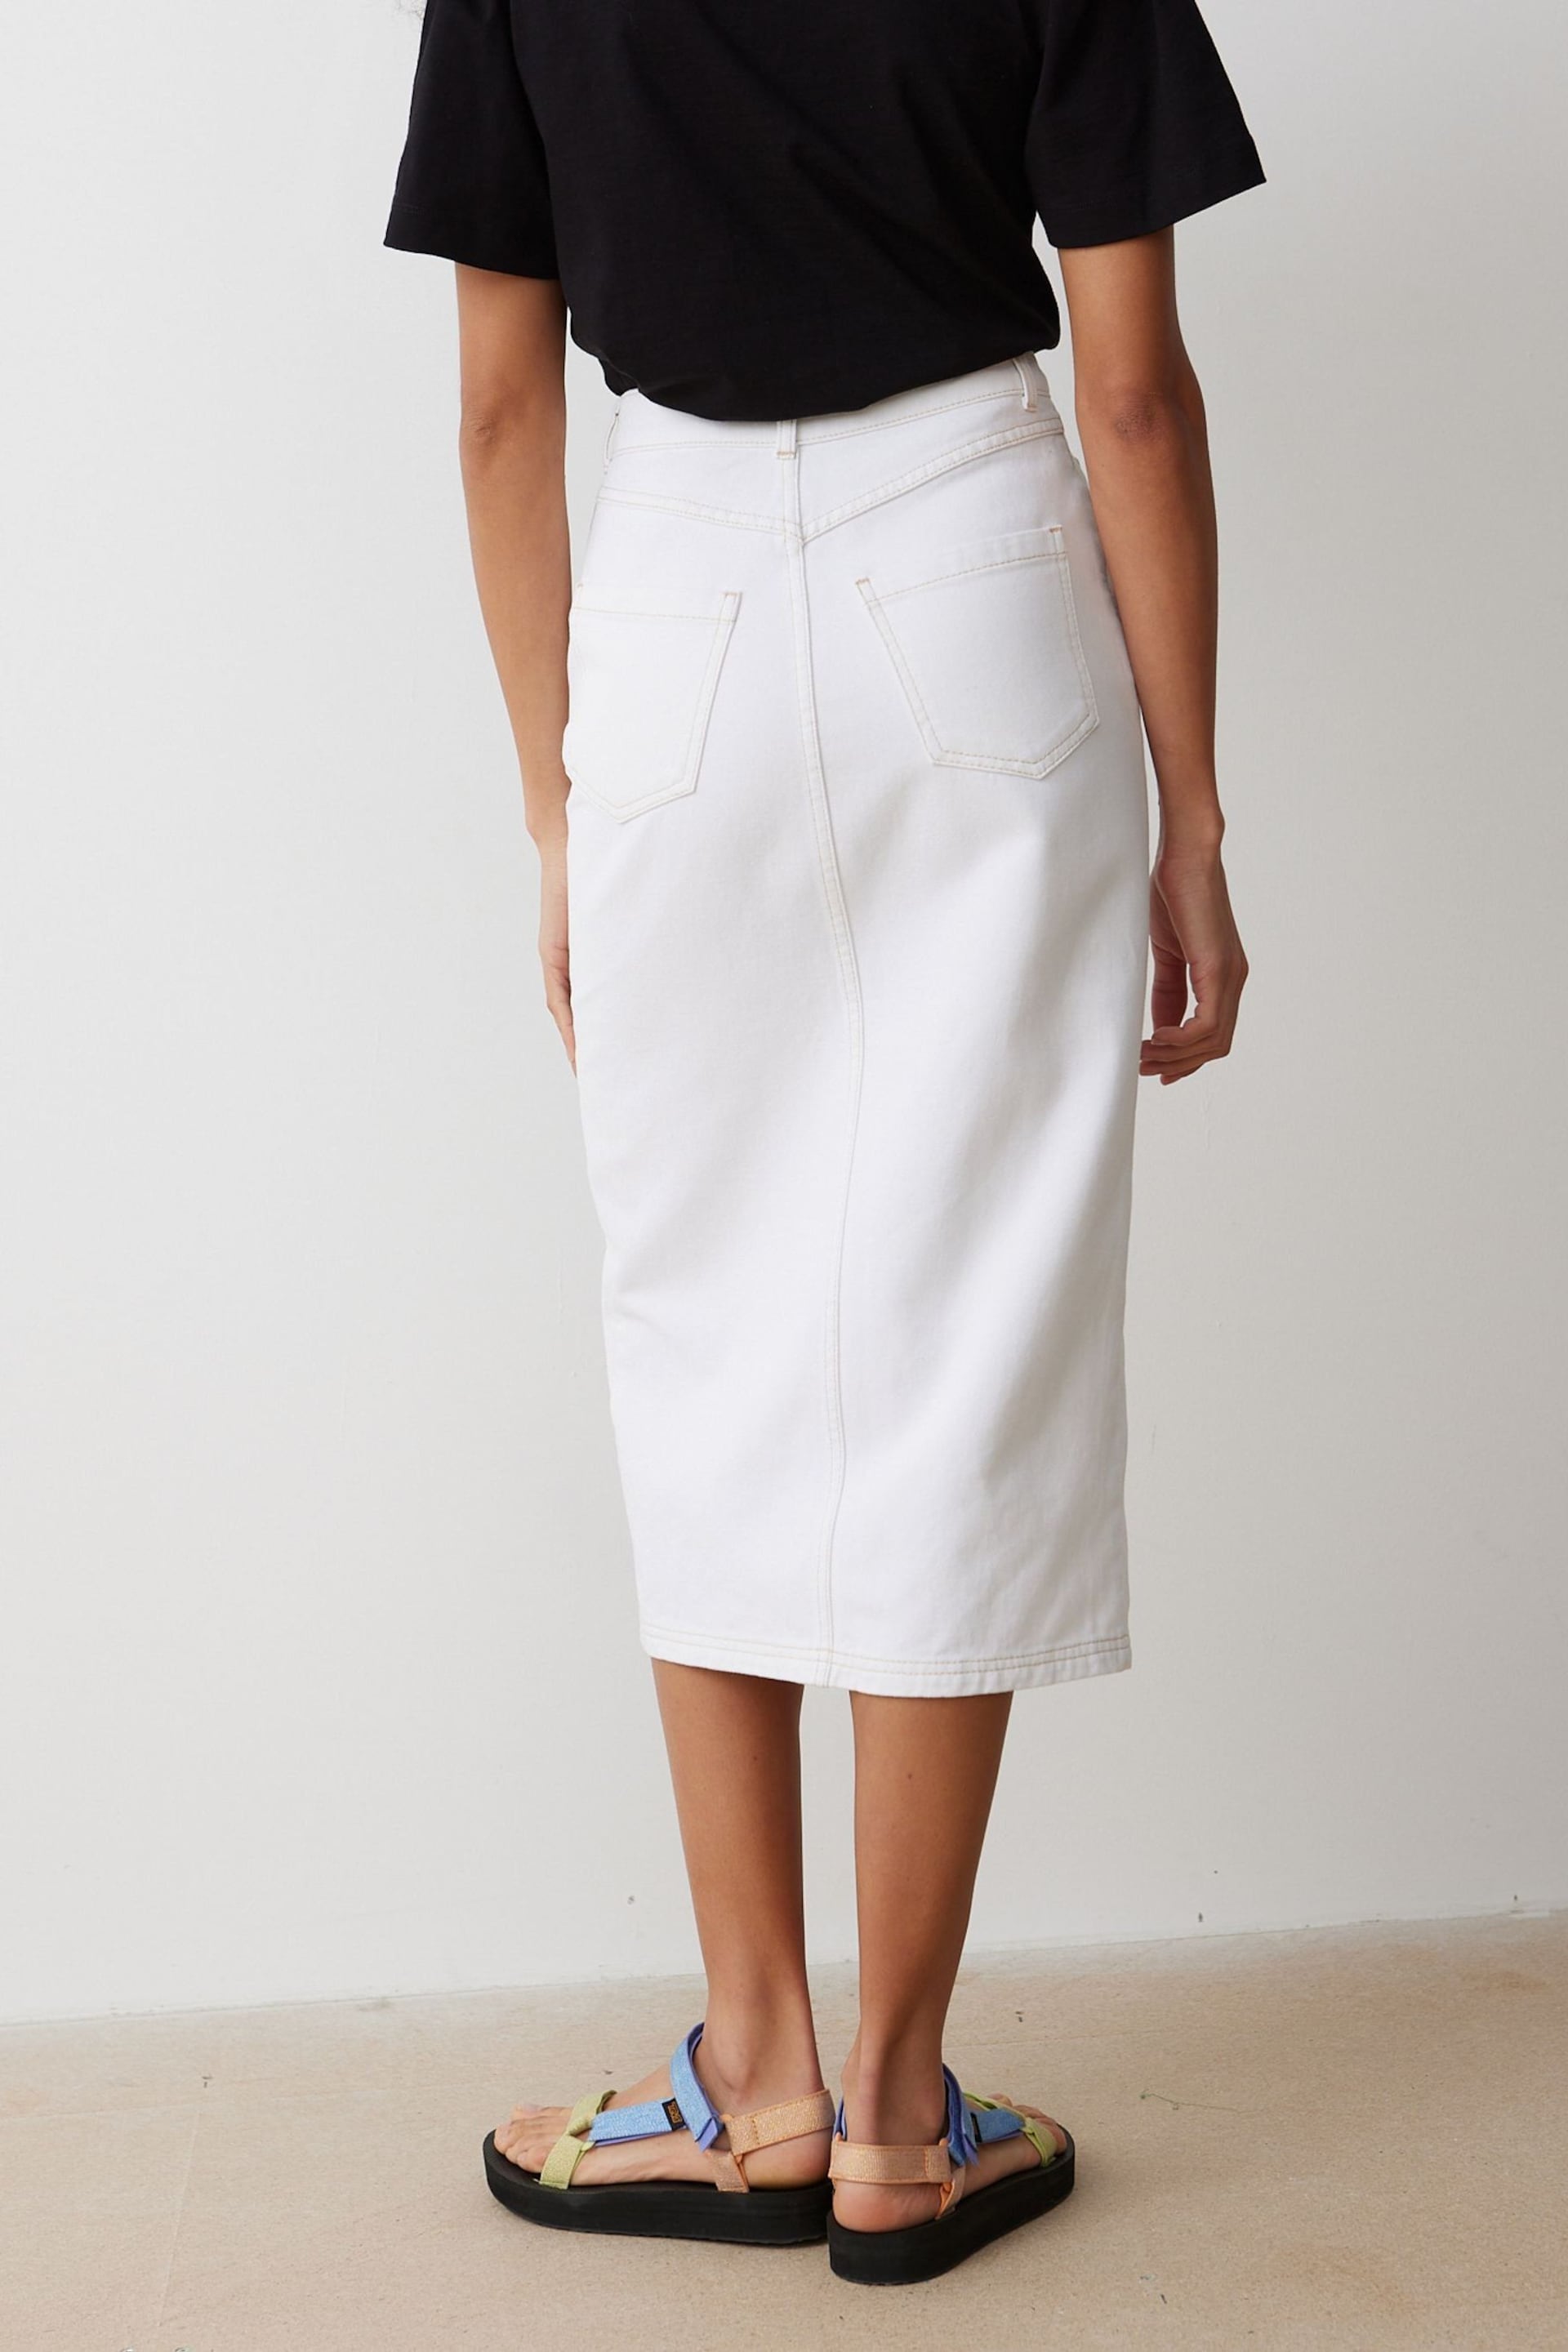 Oliver Bonas White Contrast Stitch Midi Skirt - Image 2 of 9